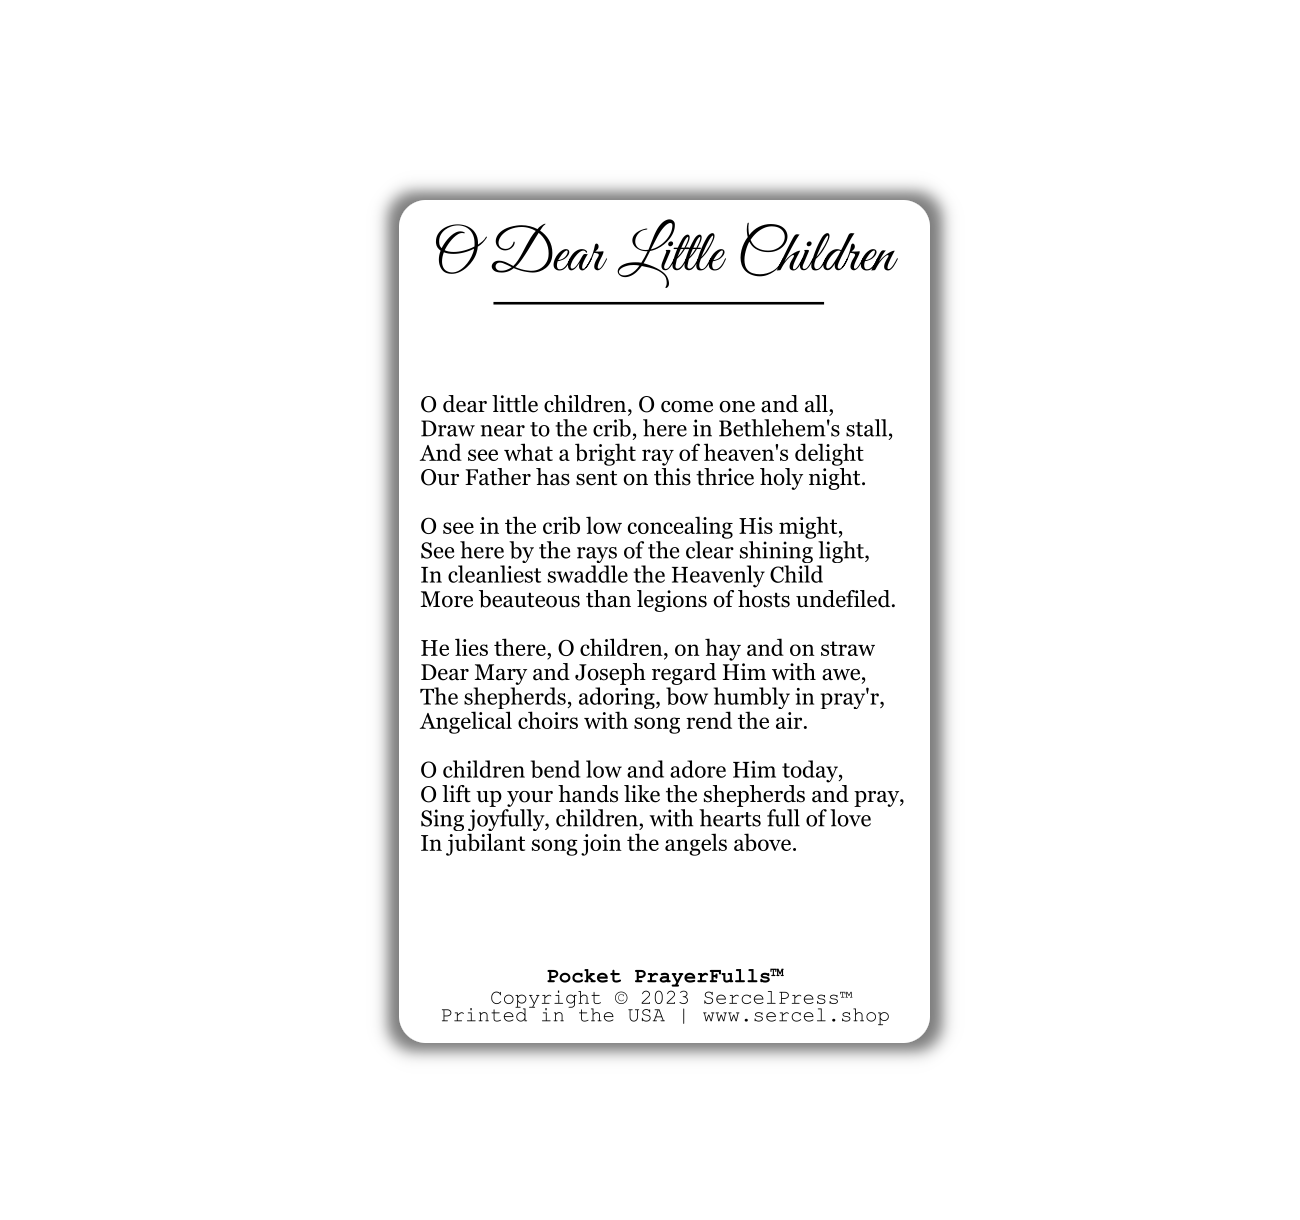 O Dear Little Children: Pocket PrayerFulls™ | Durable Wallet Prayer Cards | Advent, Christmas, Nativity Gift | Catholic Hymns